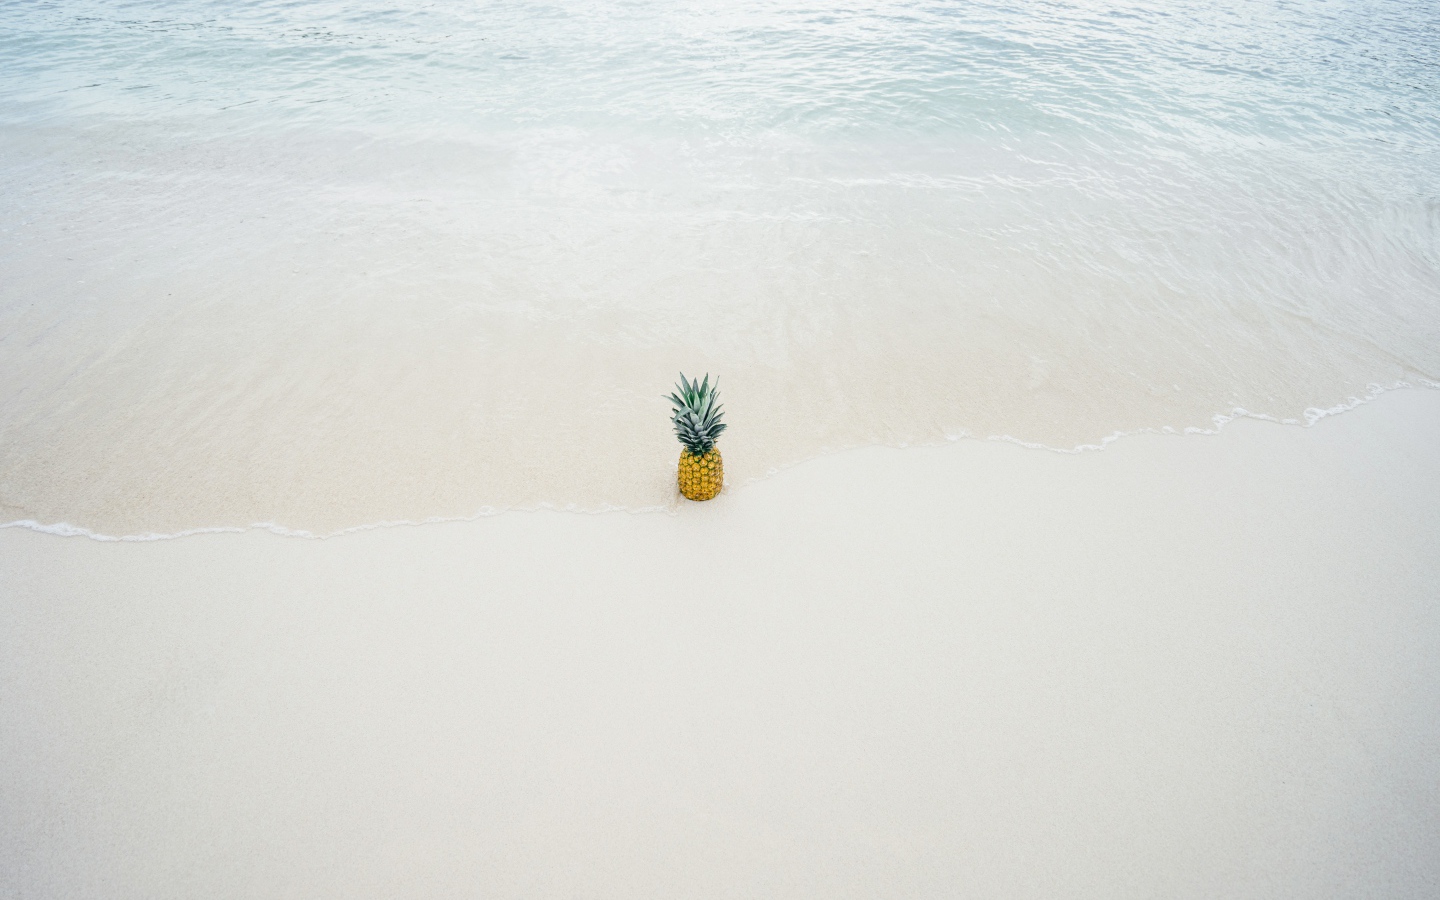 Pineapple in surf waves